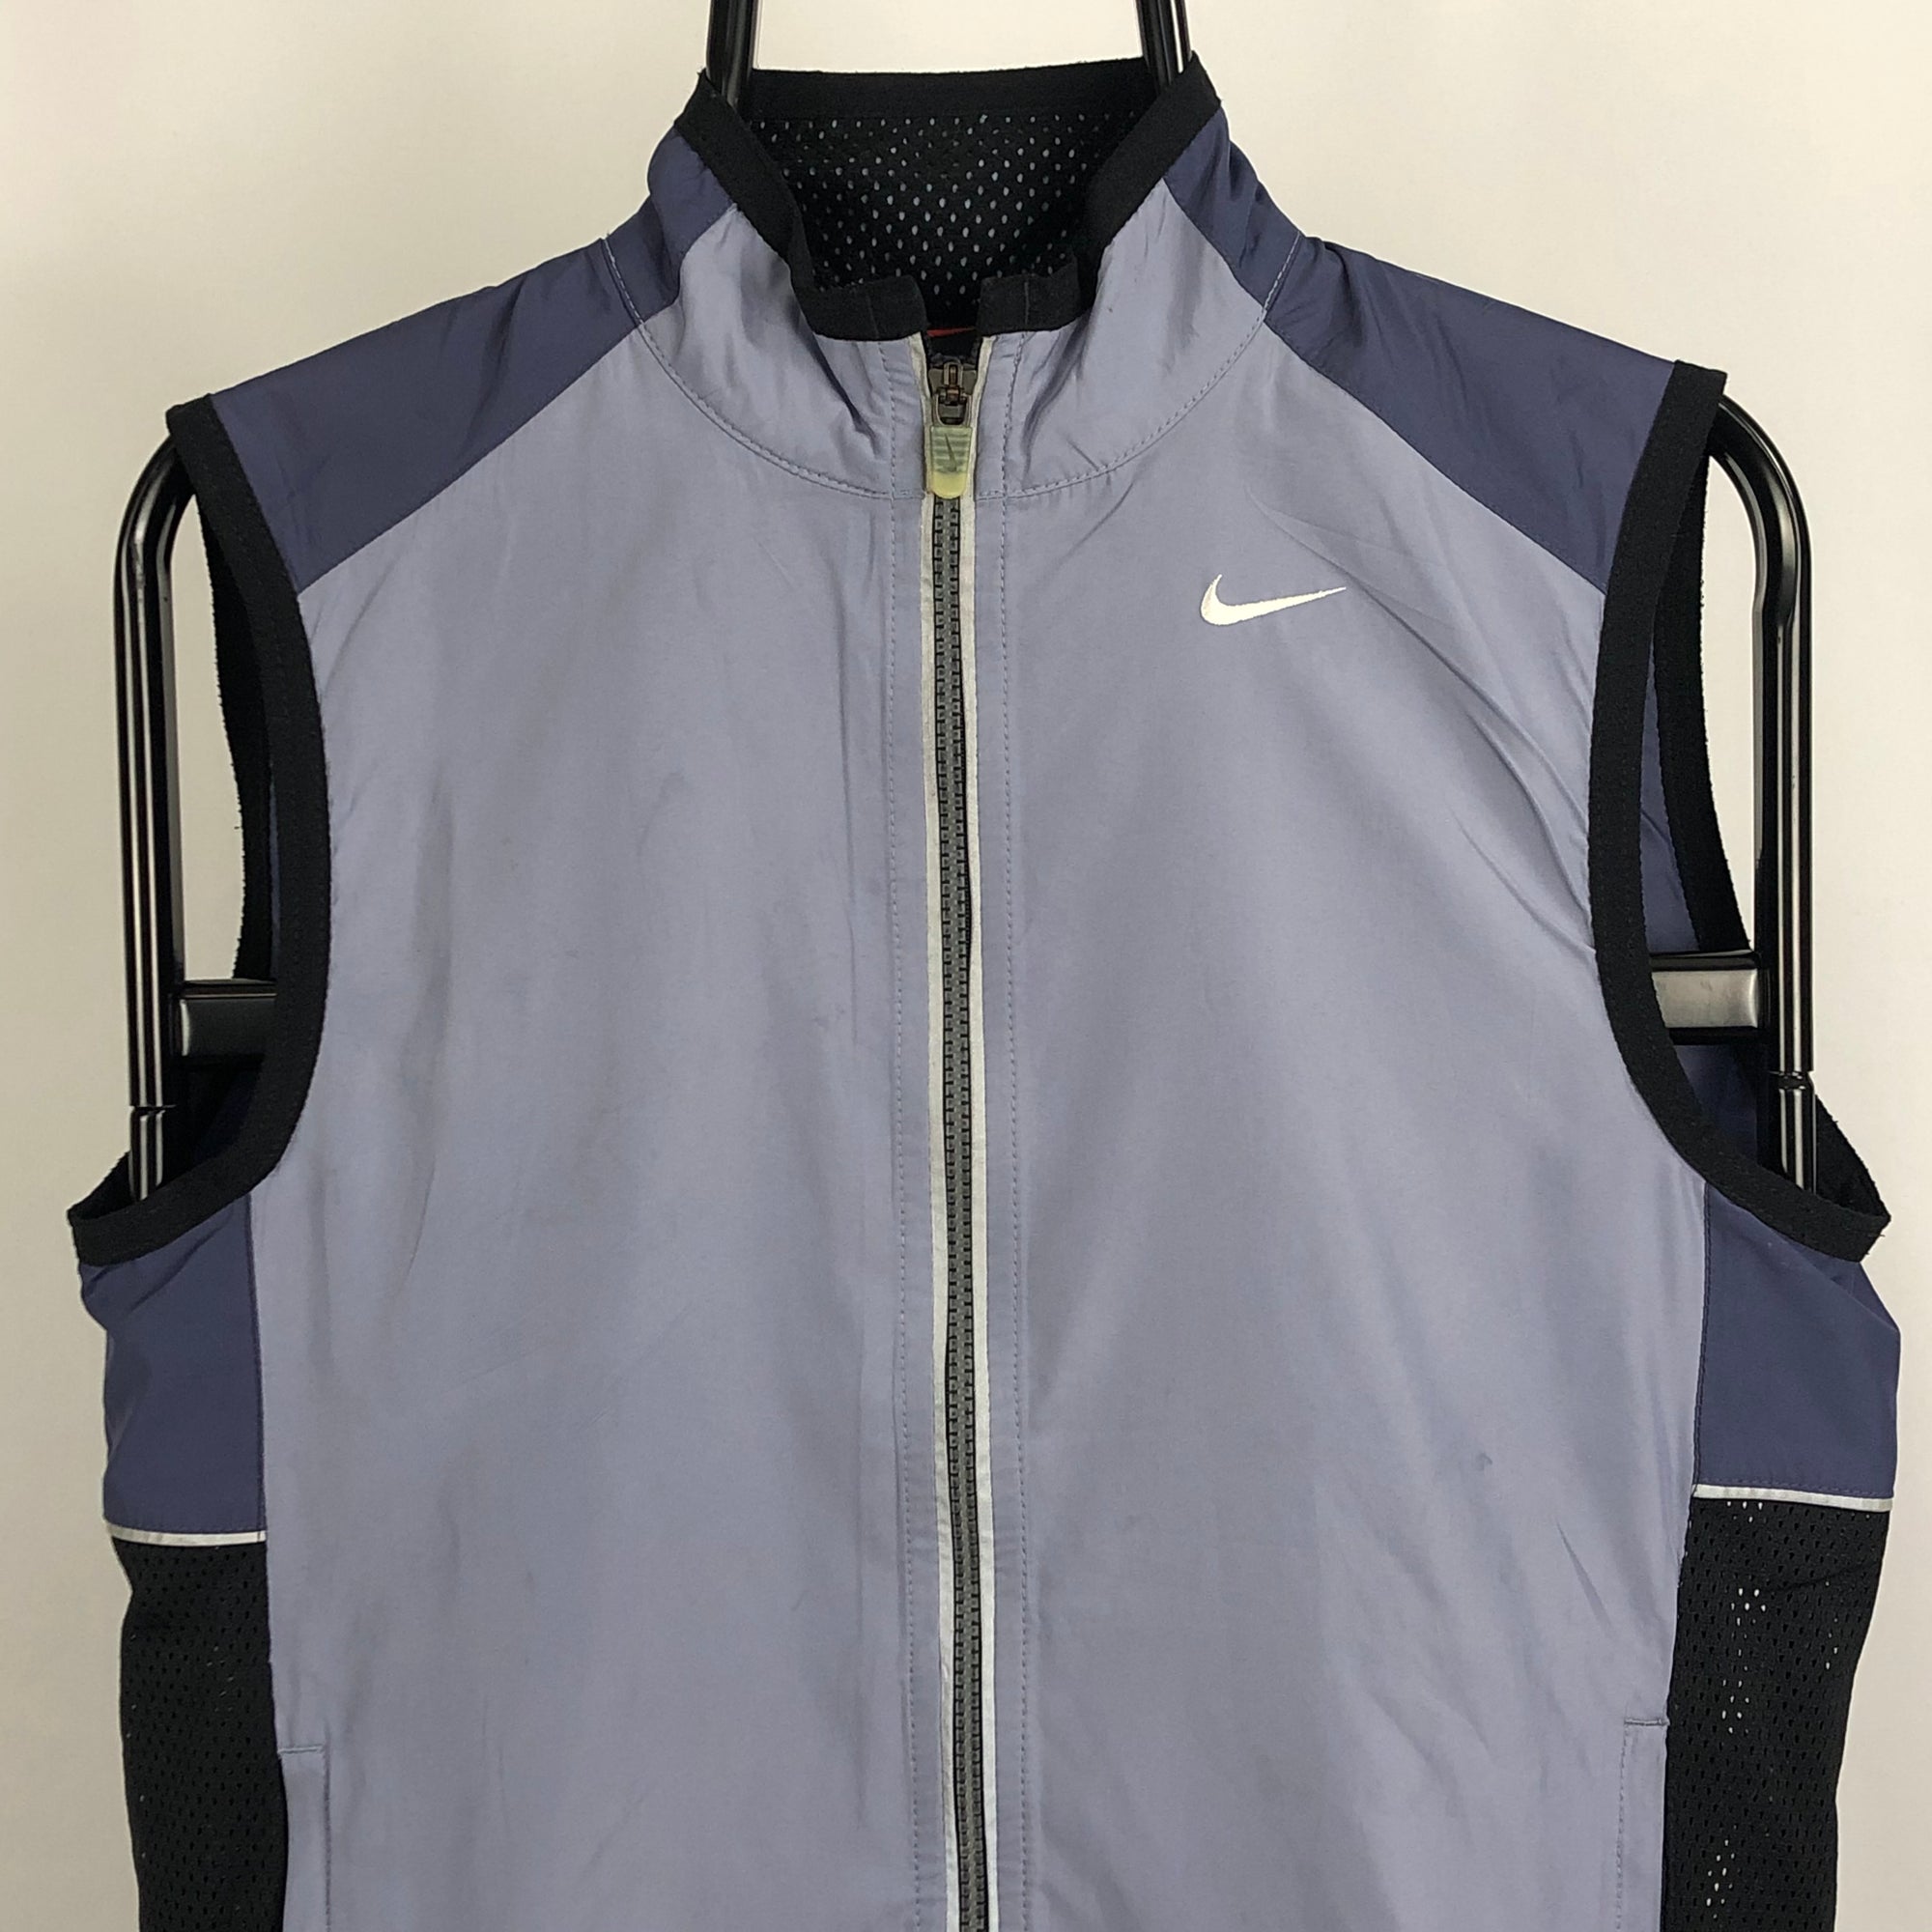 Vintage 90s Nike Lightweight Track Jacket - Men's Small/Women's Medium